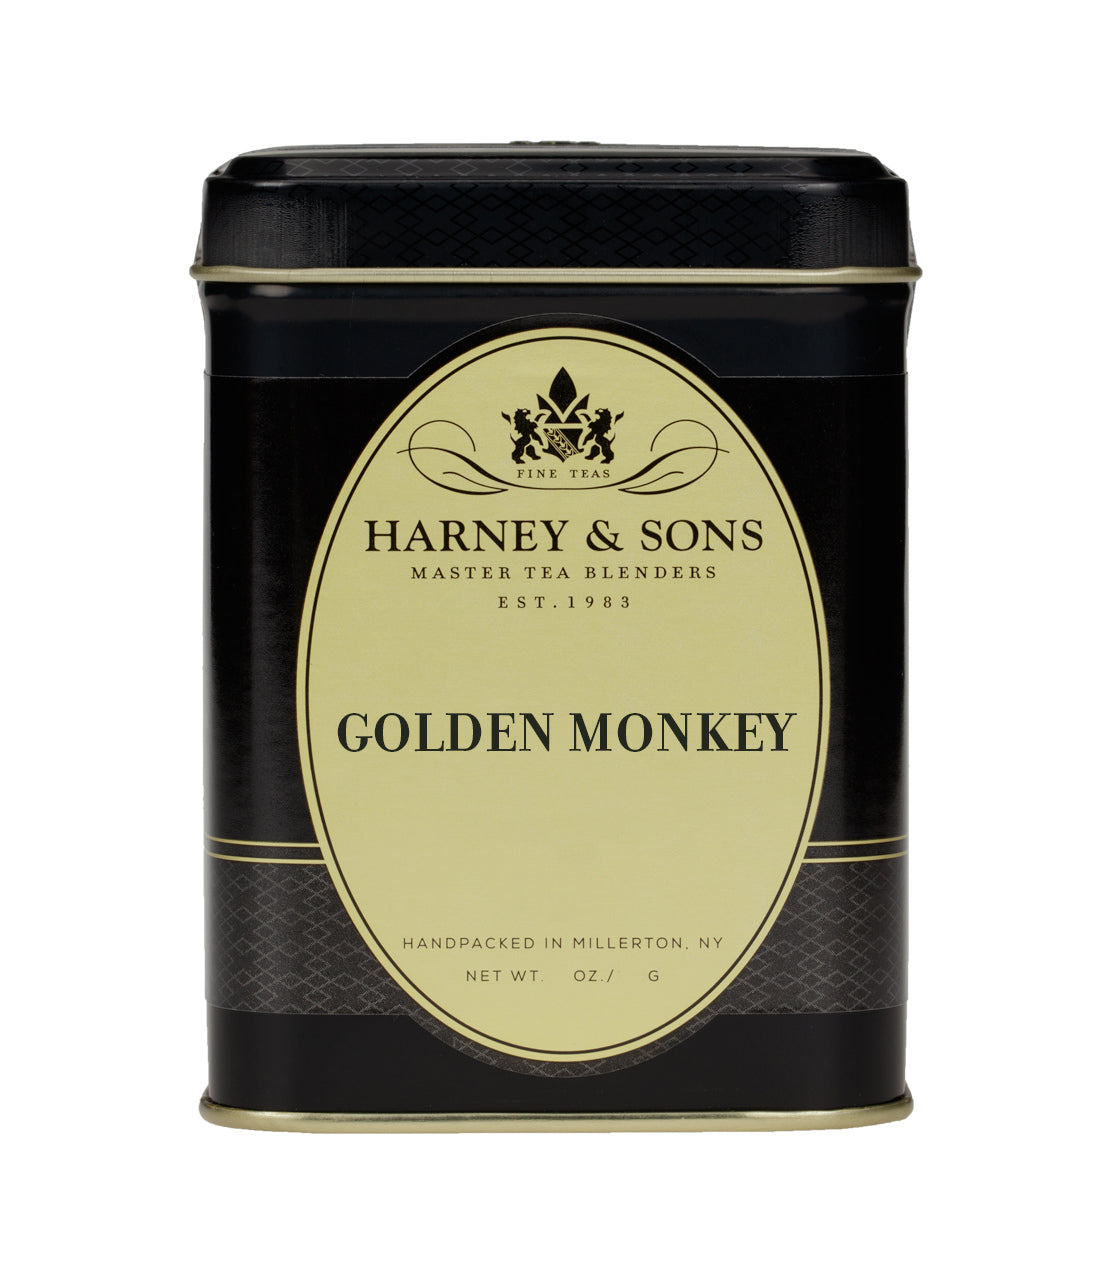 Golden Monkey - Loose 3 oz. Tin - Harney & Sons Fine Teas